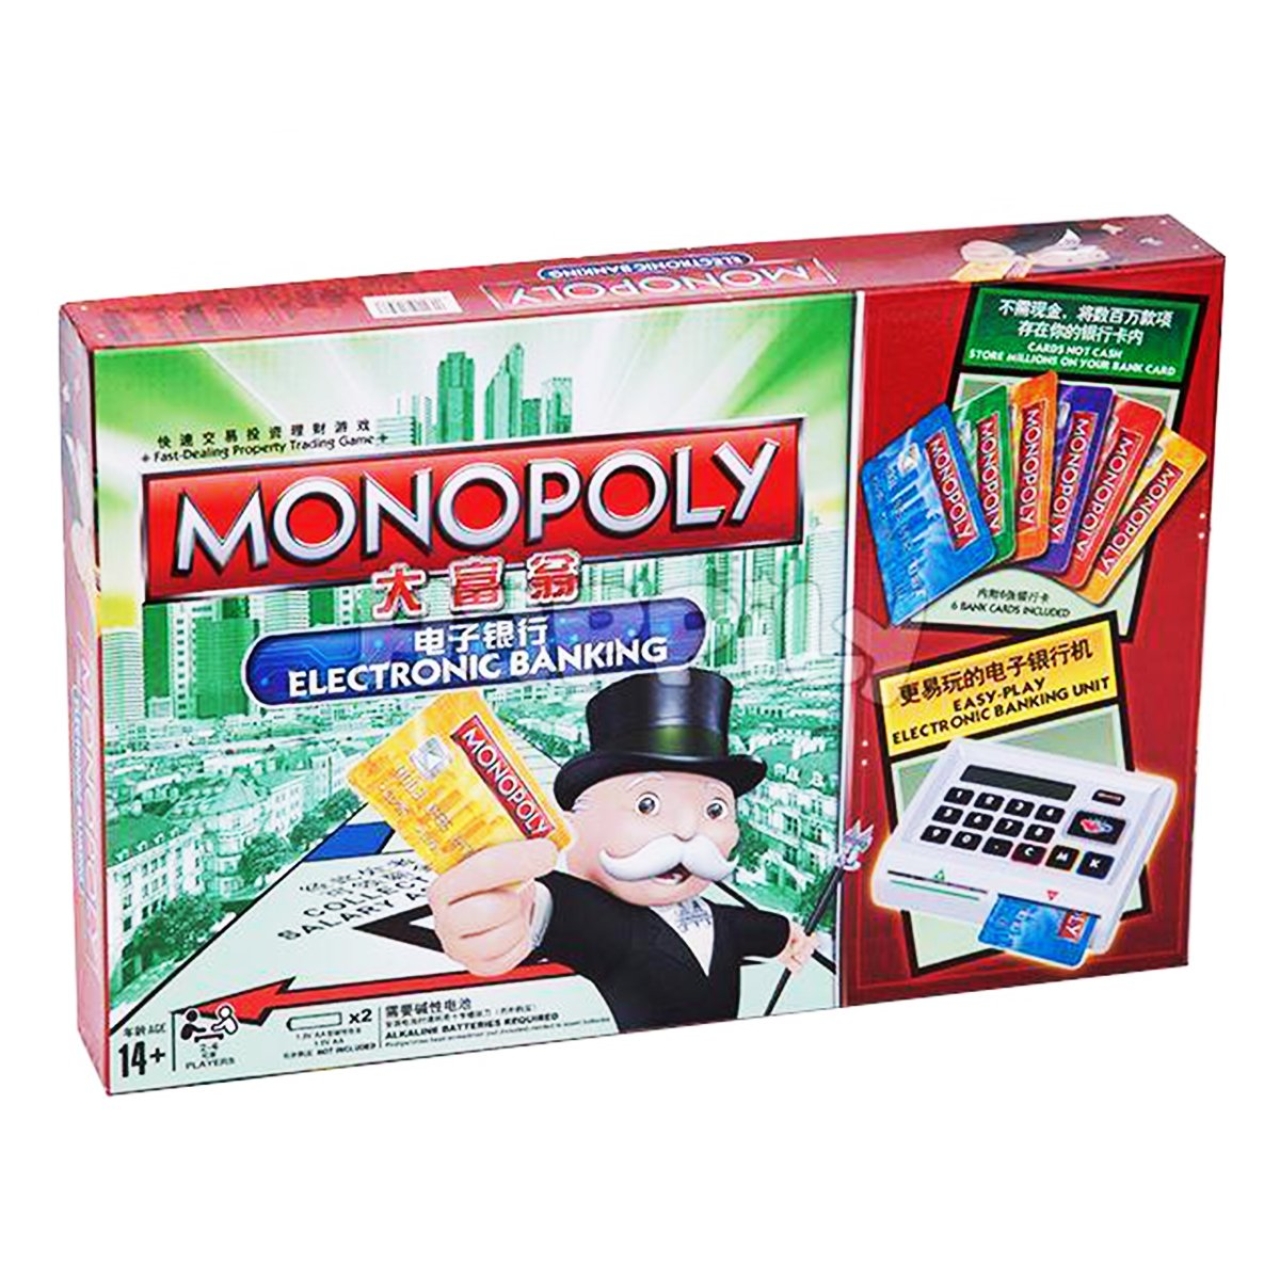 بازی فکری مدل مونوپولی کد 6136